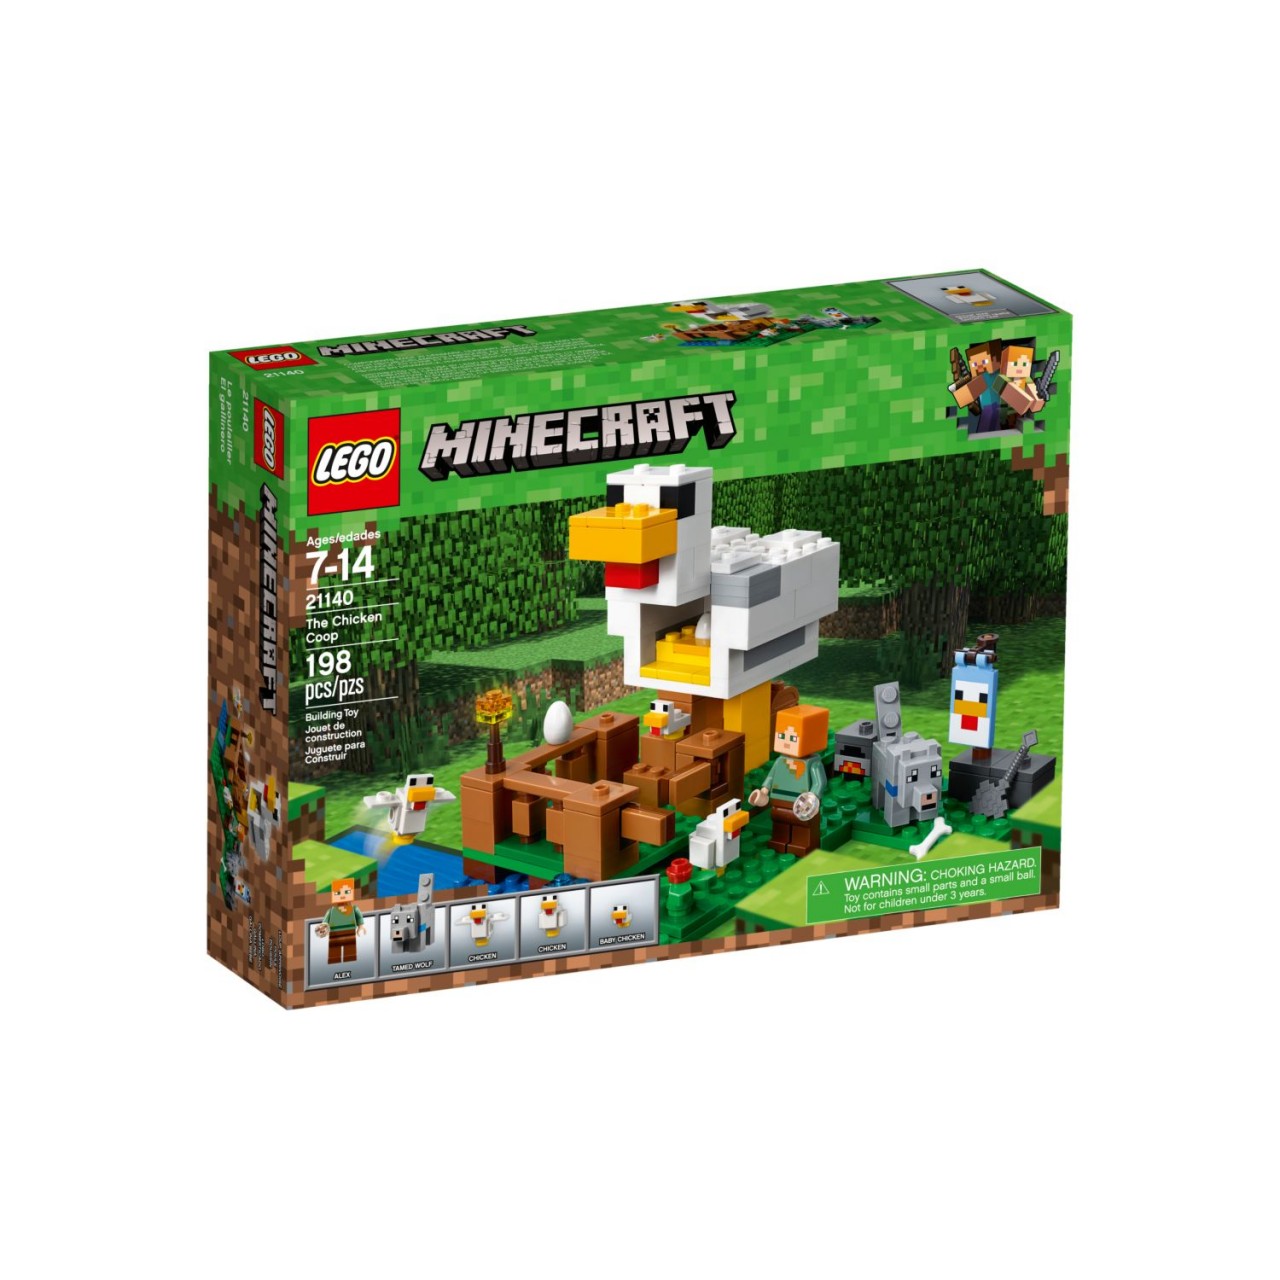 LEGO MINECRAFT 21140 Hühnerstall